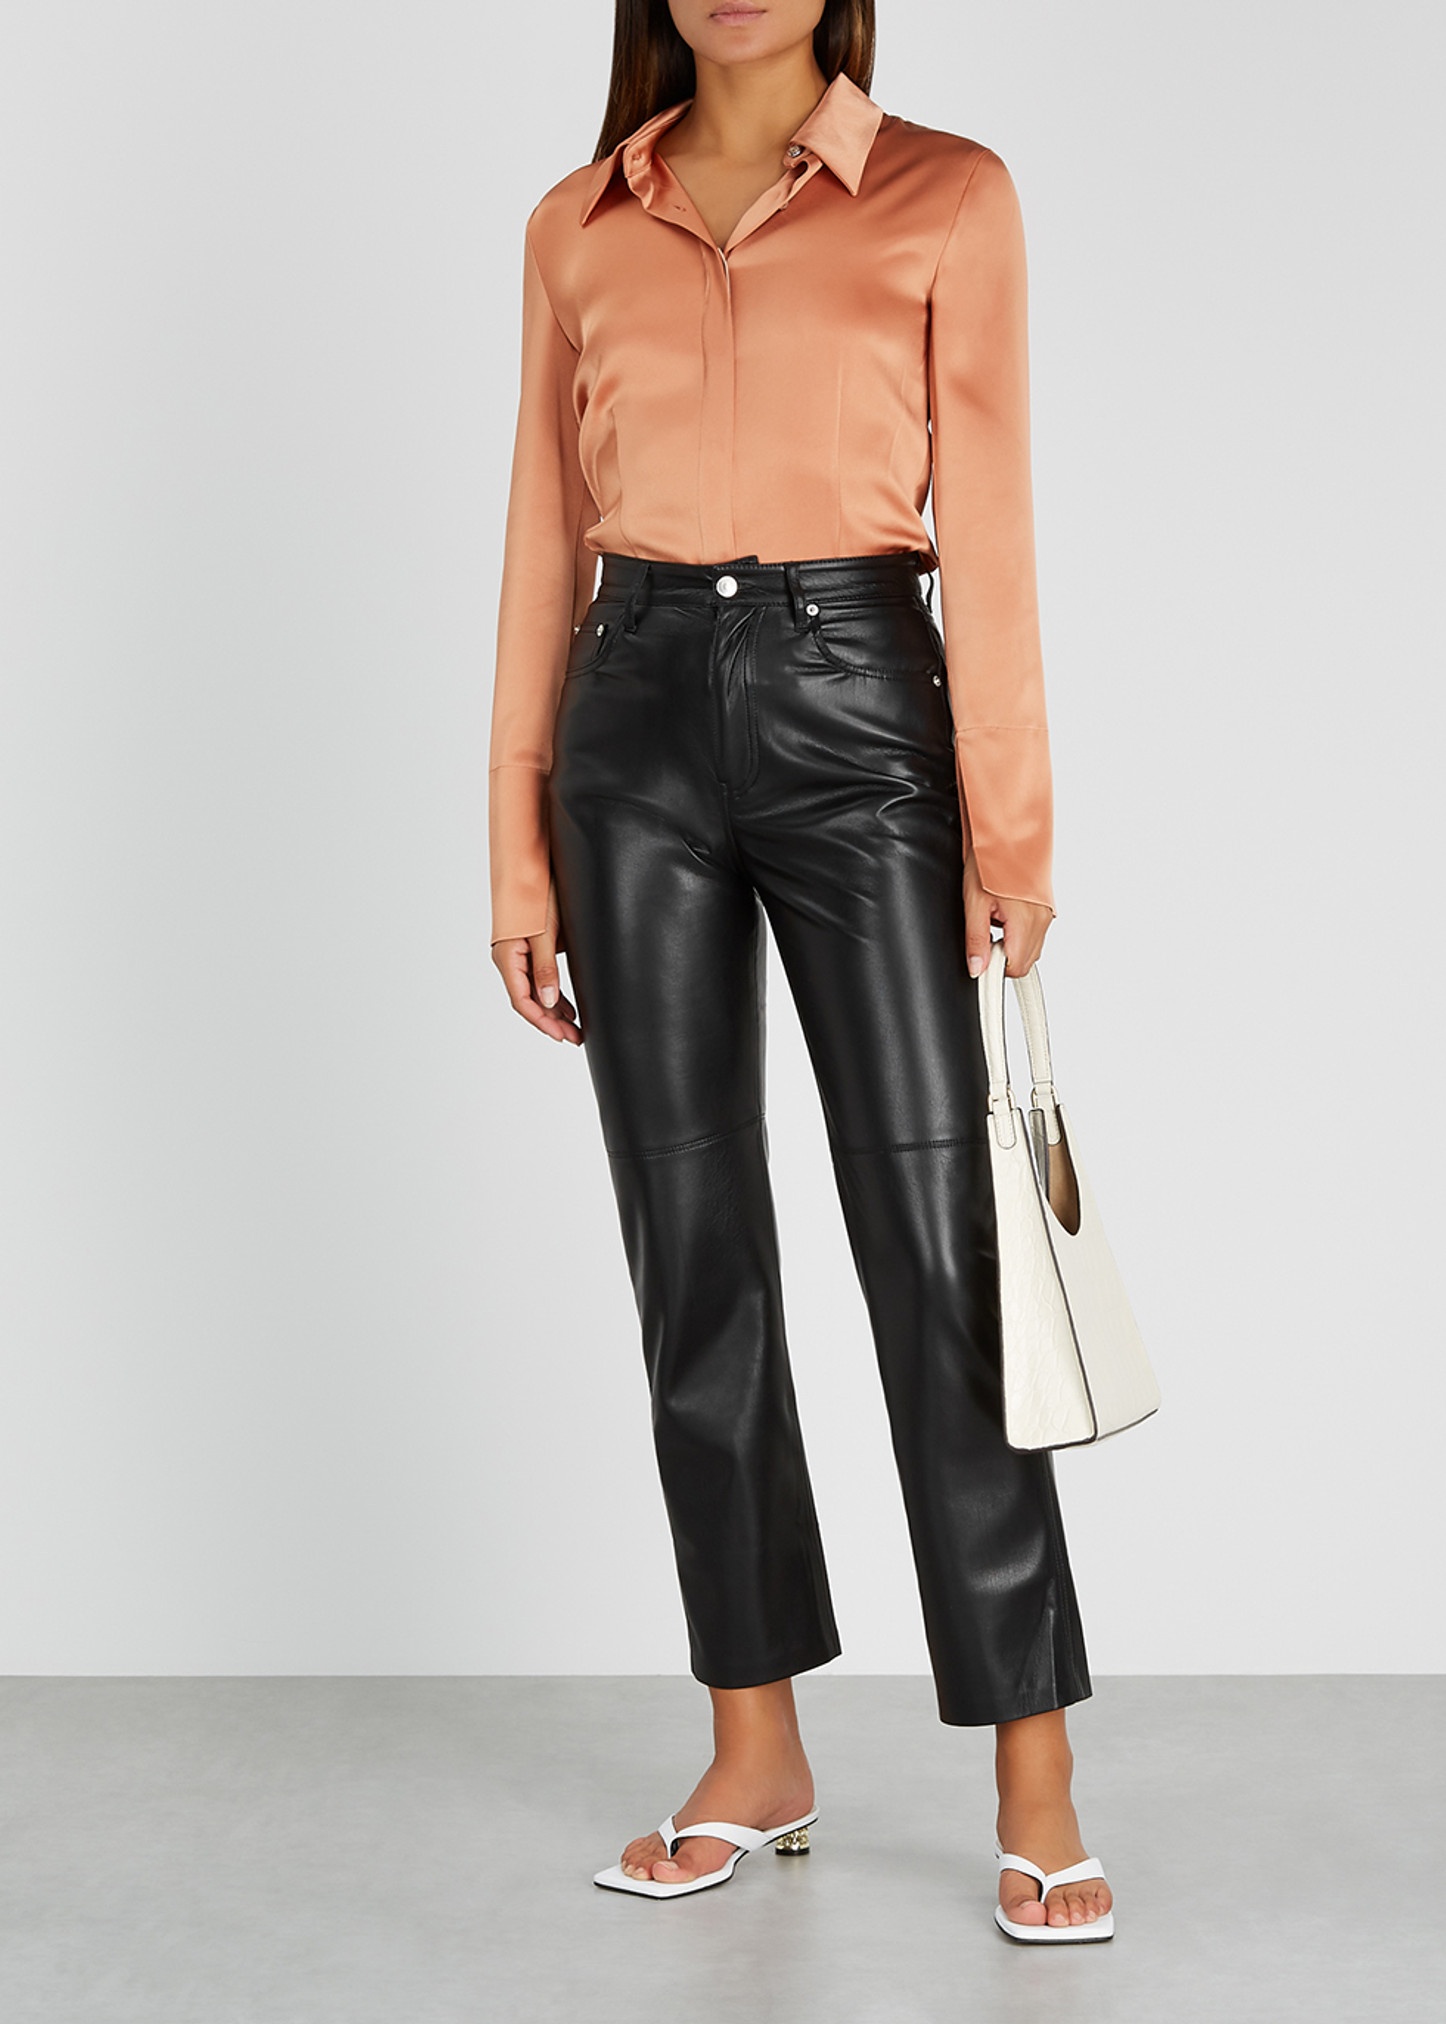 Vinni black faux leather trousers - 4